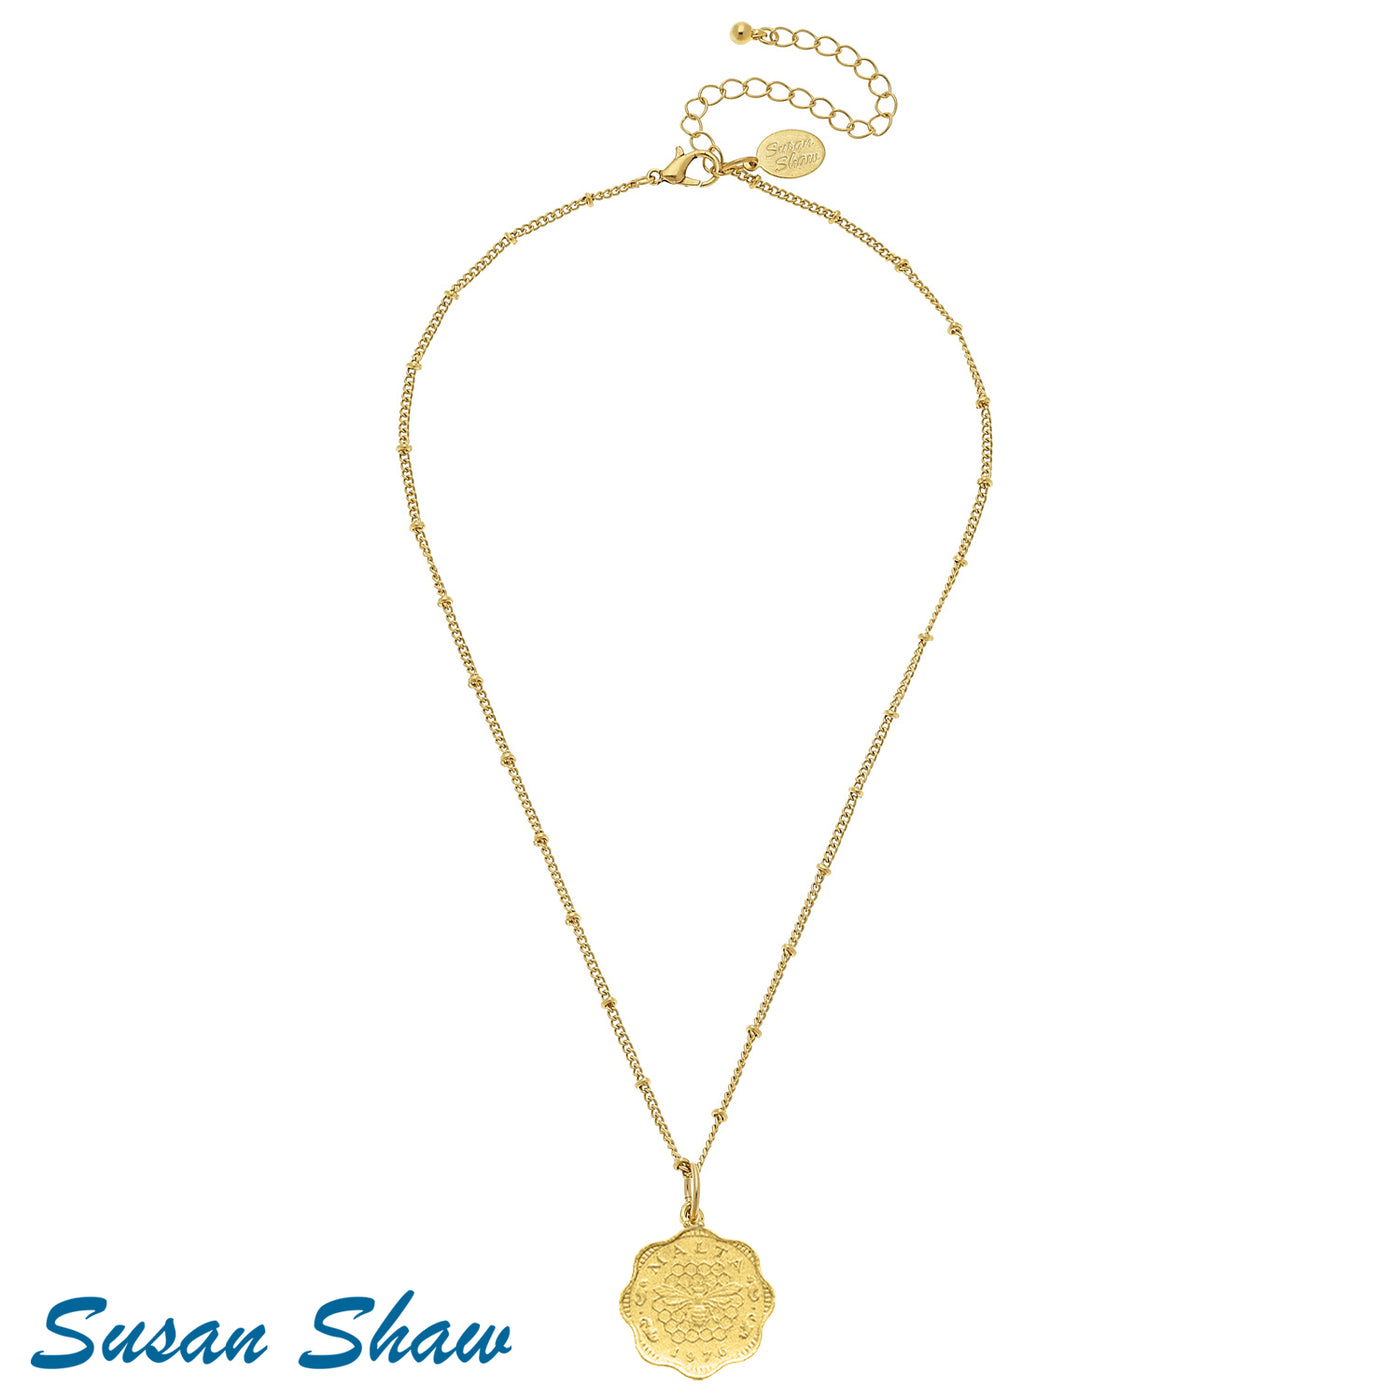 Susan Shaw Dainty Malta Coin Necklace